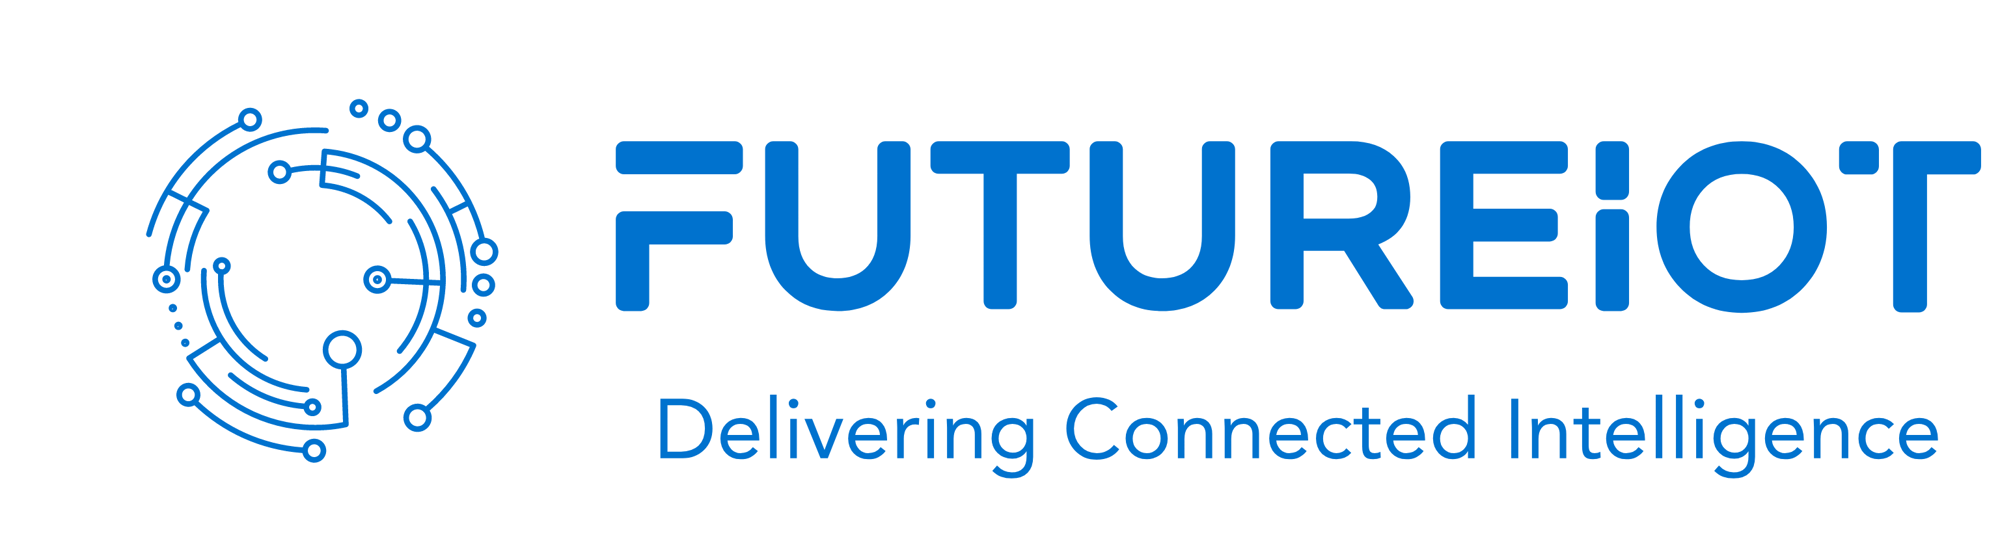 FutureIoT_color_logo_transparent